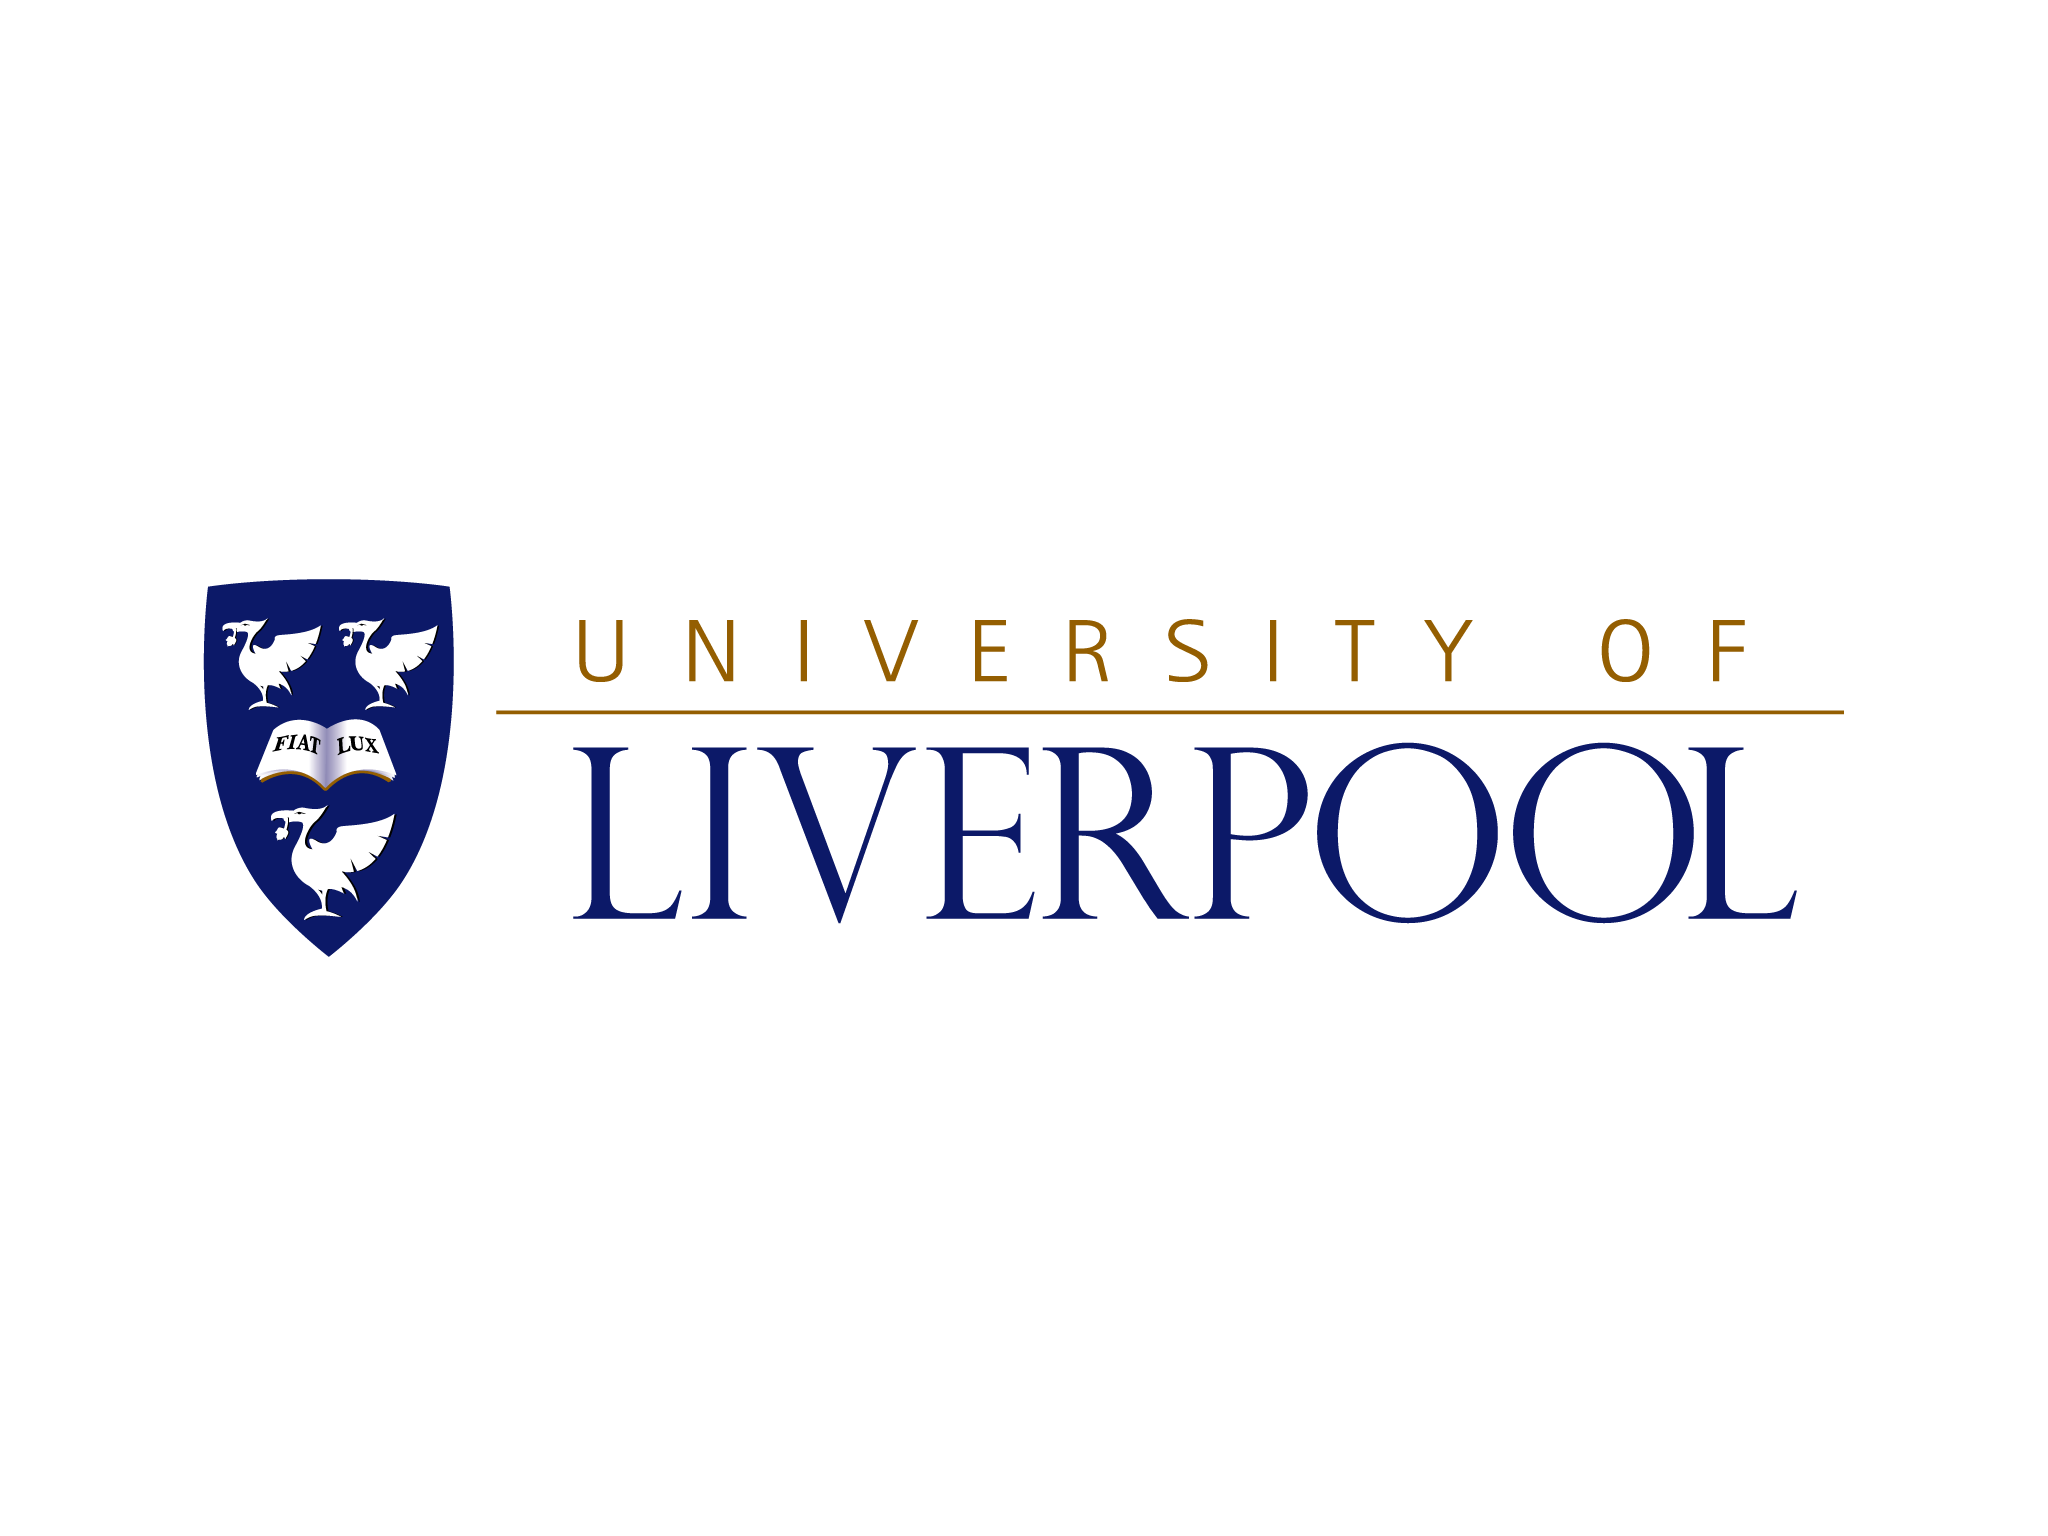 University of liverpool